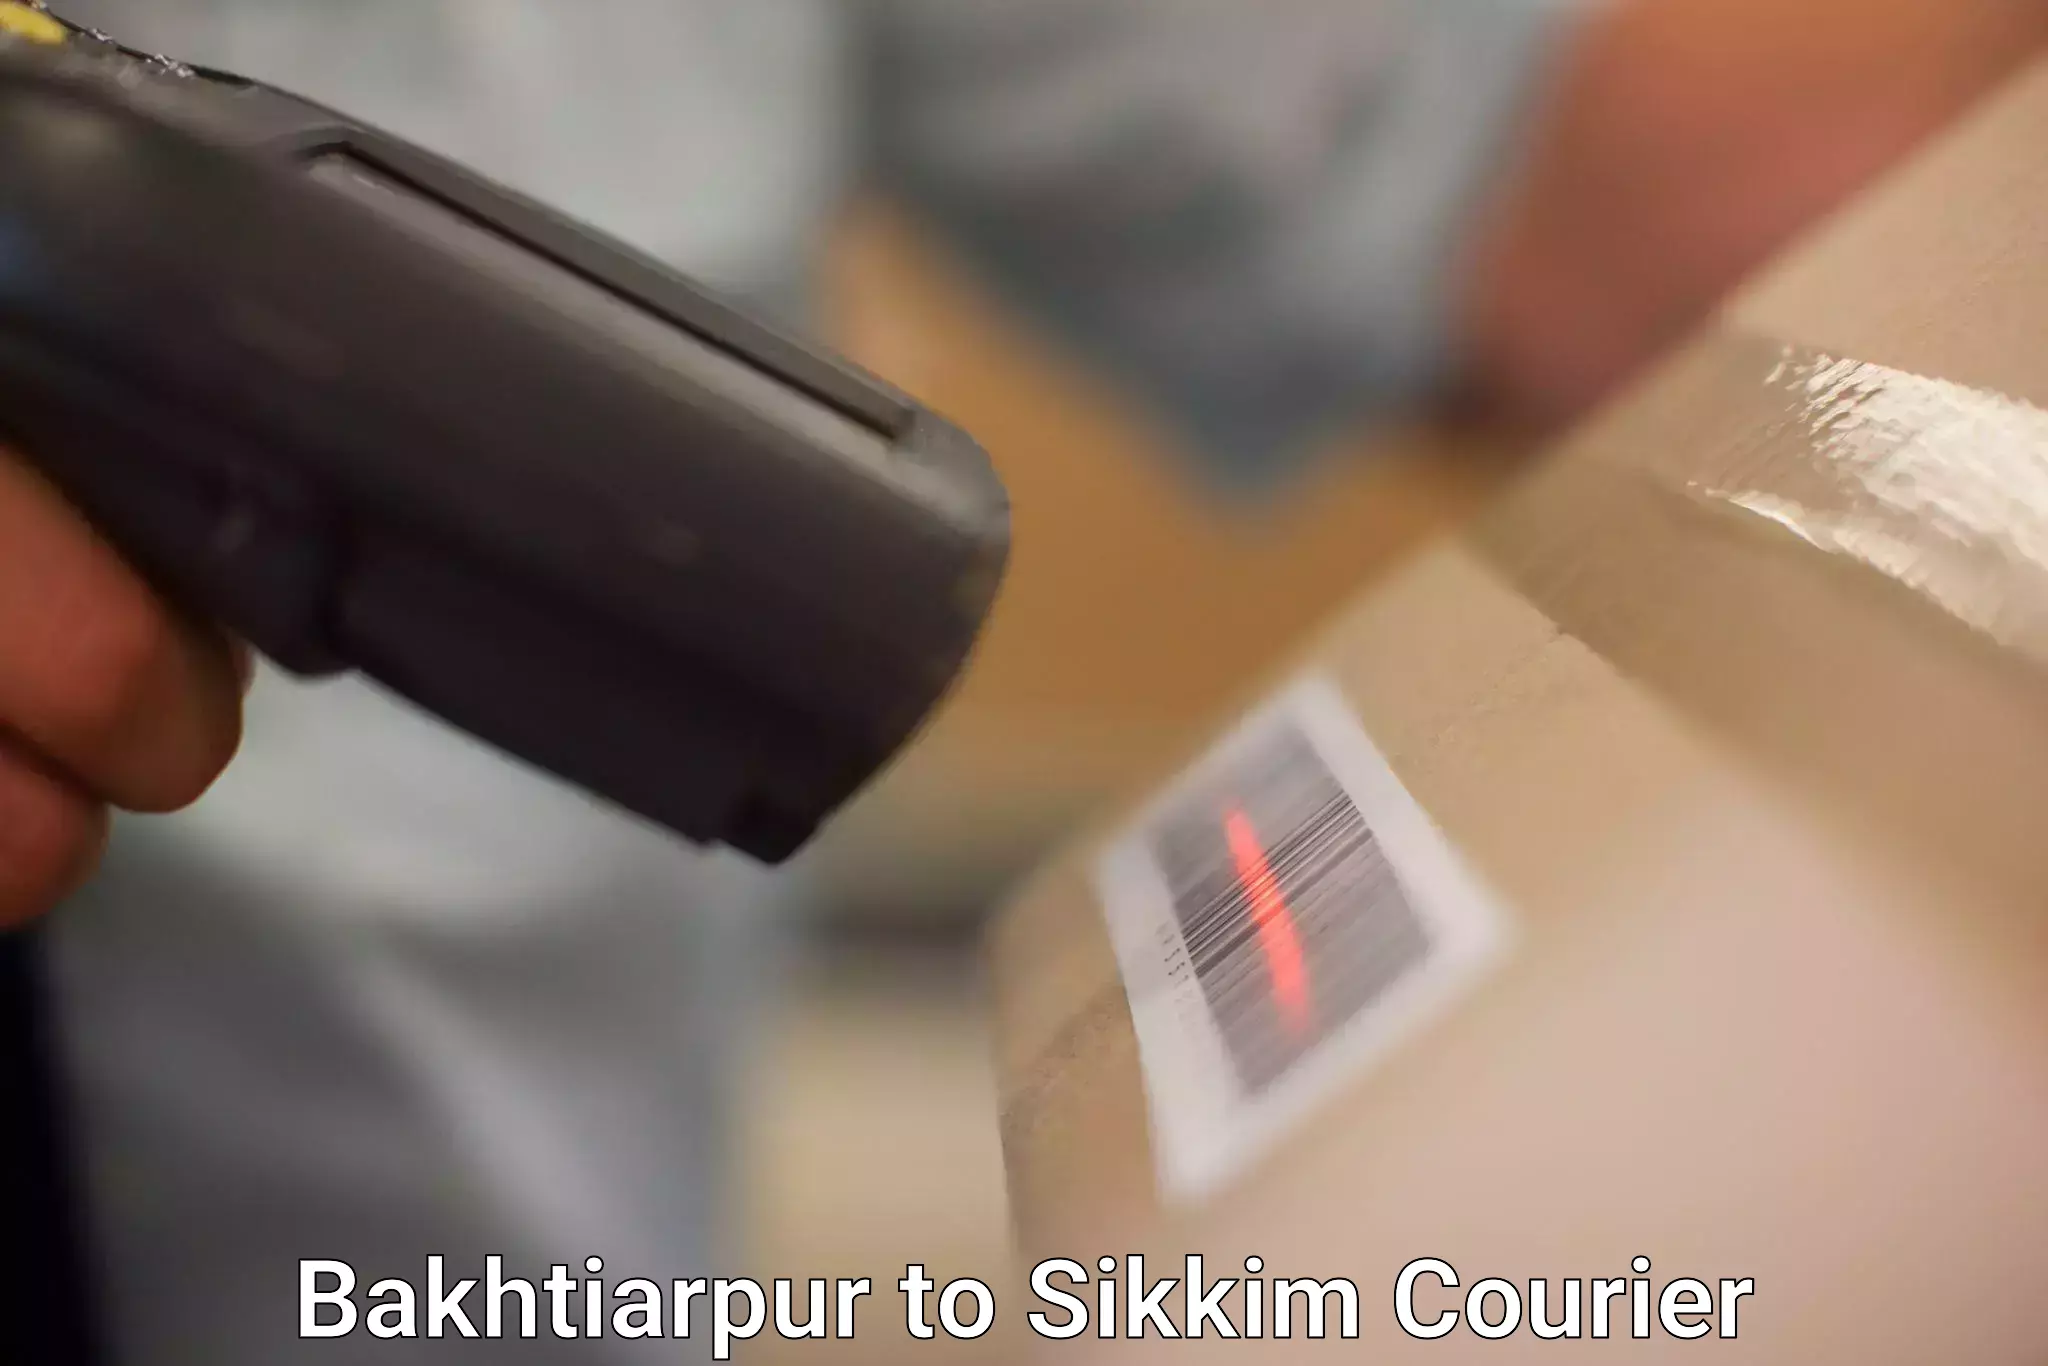 Delivery service partnership Bakhtiarpur to Sikkim